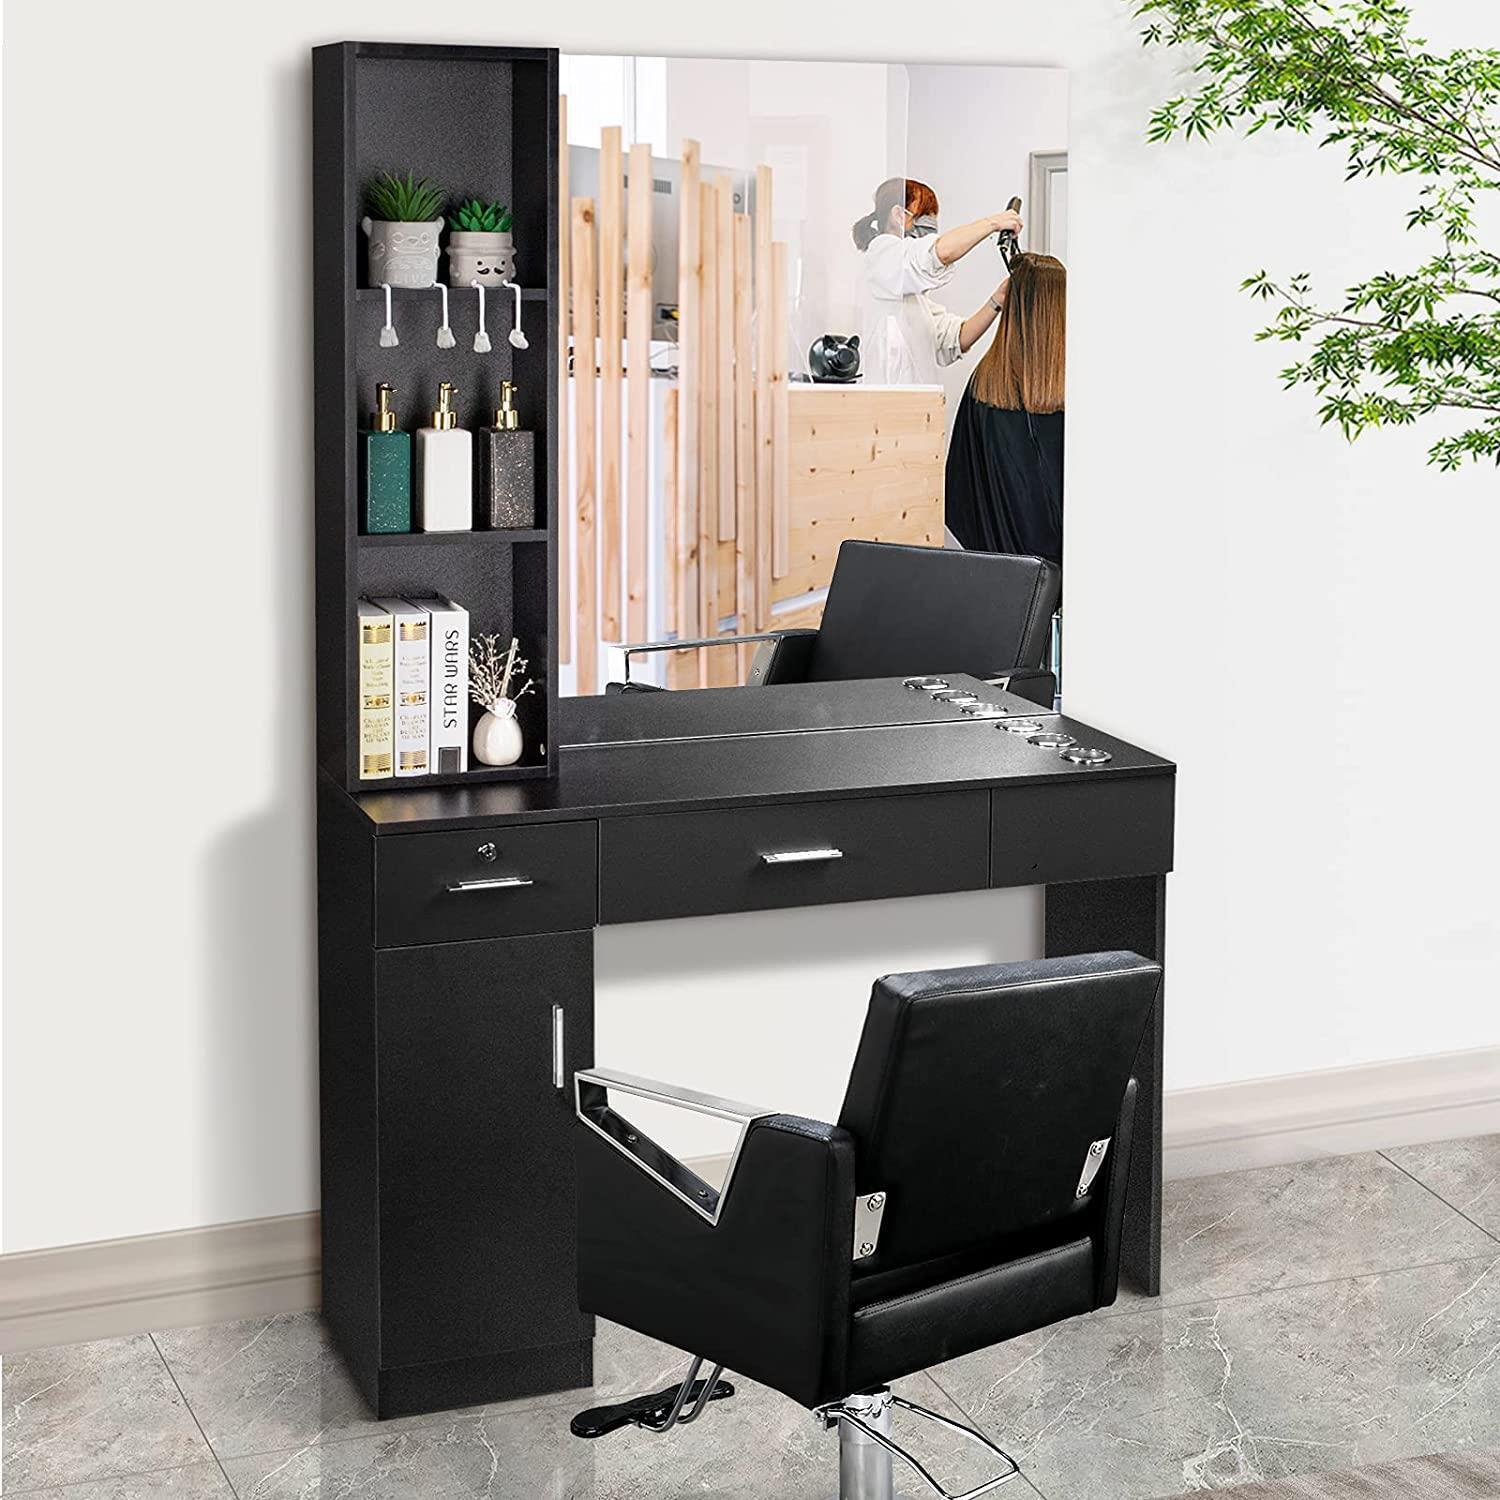 thinkstar Beauty Salon Station Table Hair Styling Barber Storage Cabinet Shelves W/ Mirror